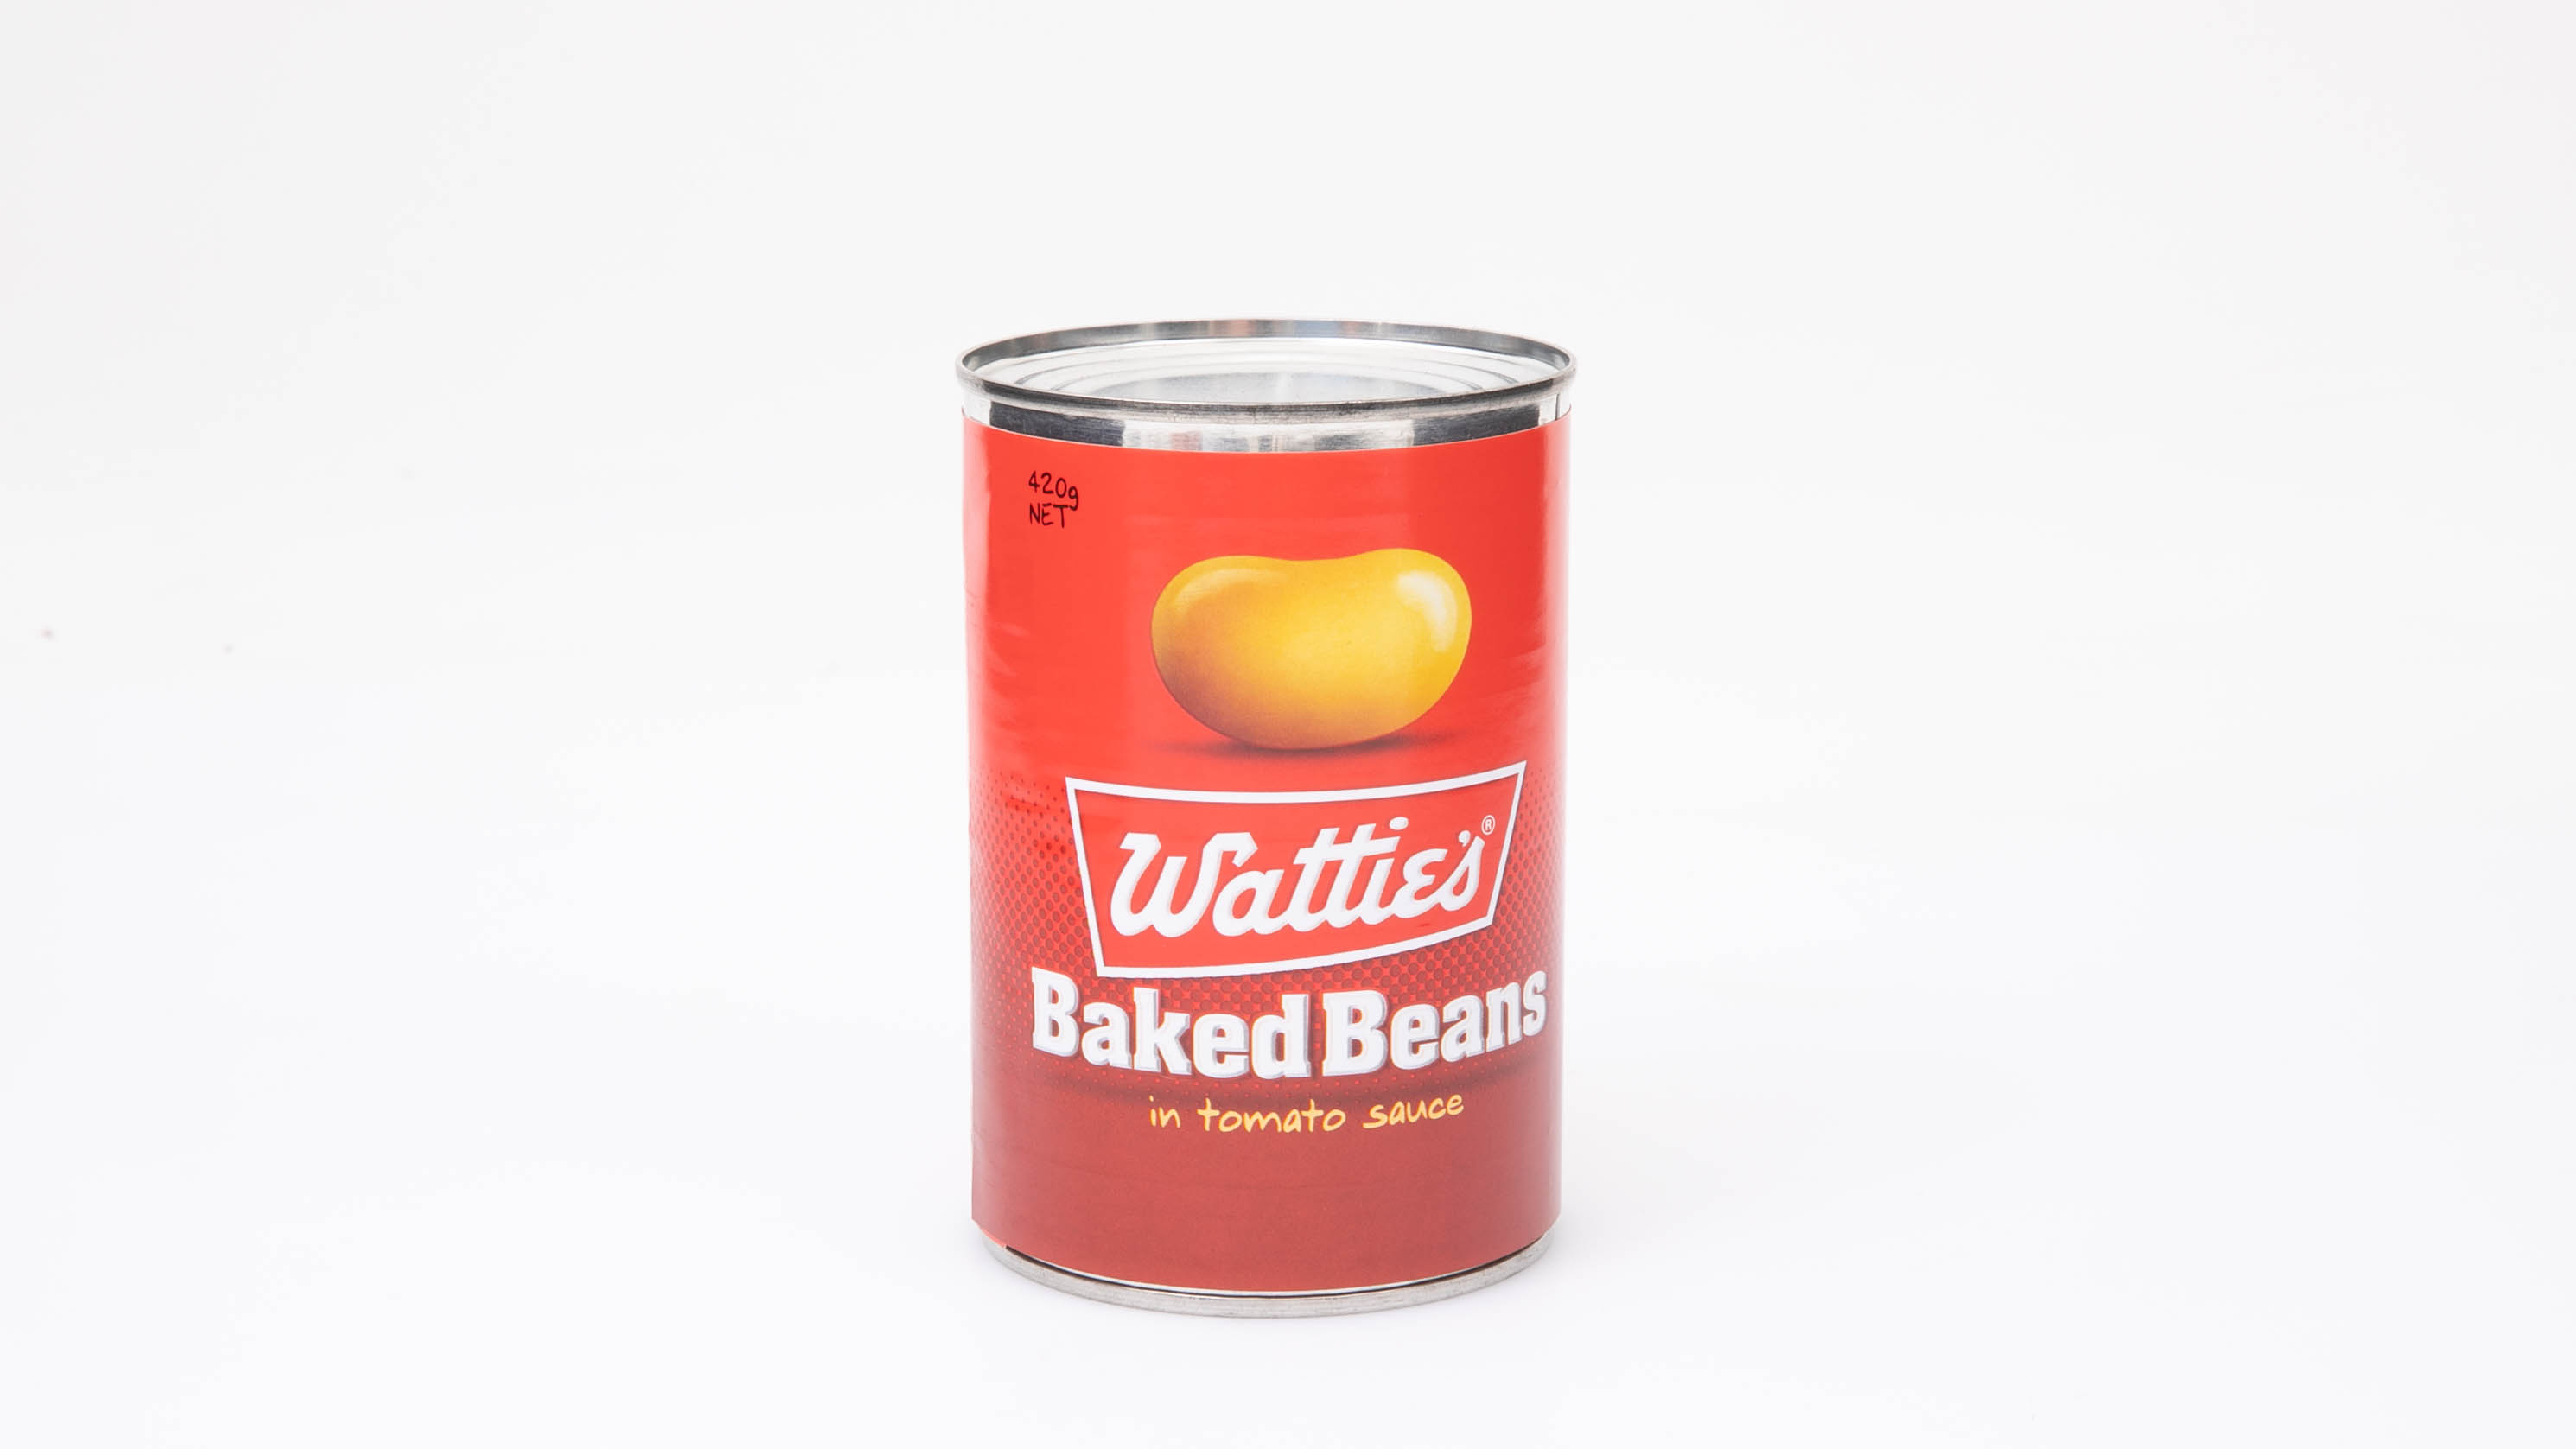 Wattie's Baked Beans in Tomato Sauce carousel image